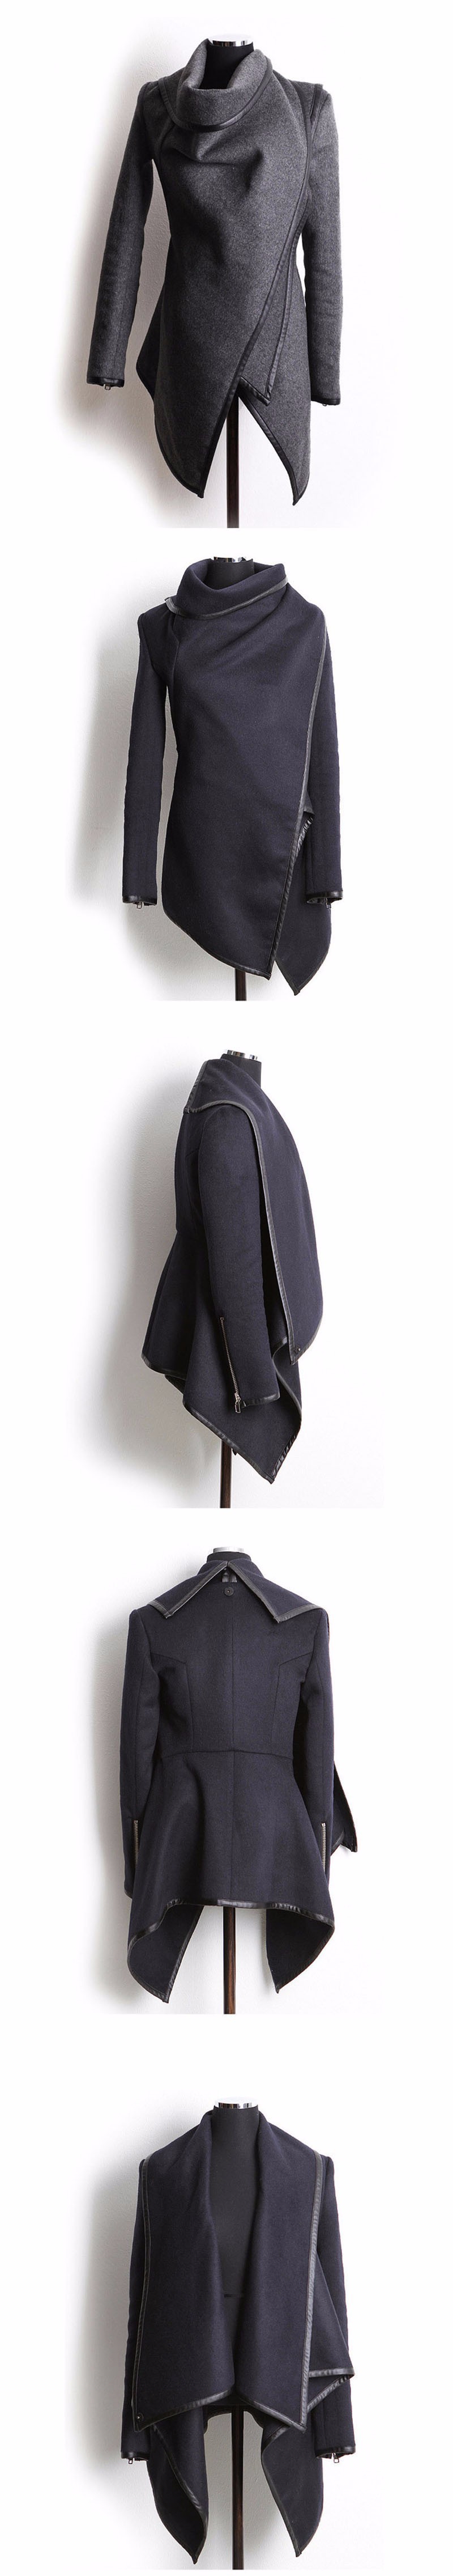 2015 New Fashion Winter Woolen Overcoat Women Jackets Woolen Coat Free Shipping Casaco FemininoTurn-Down Collar Zipper Jacket (2)